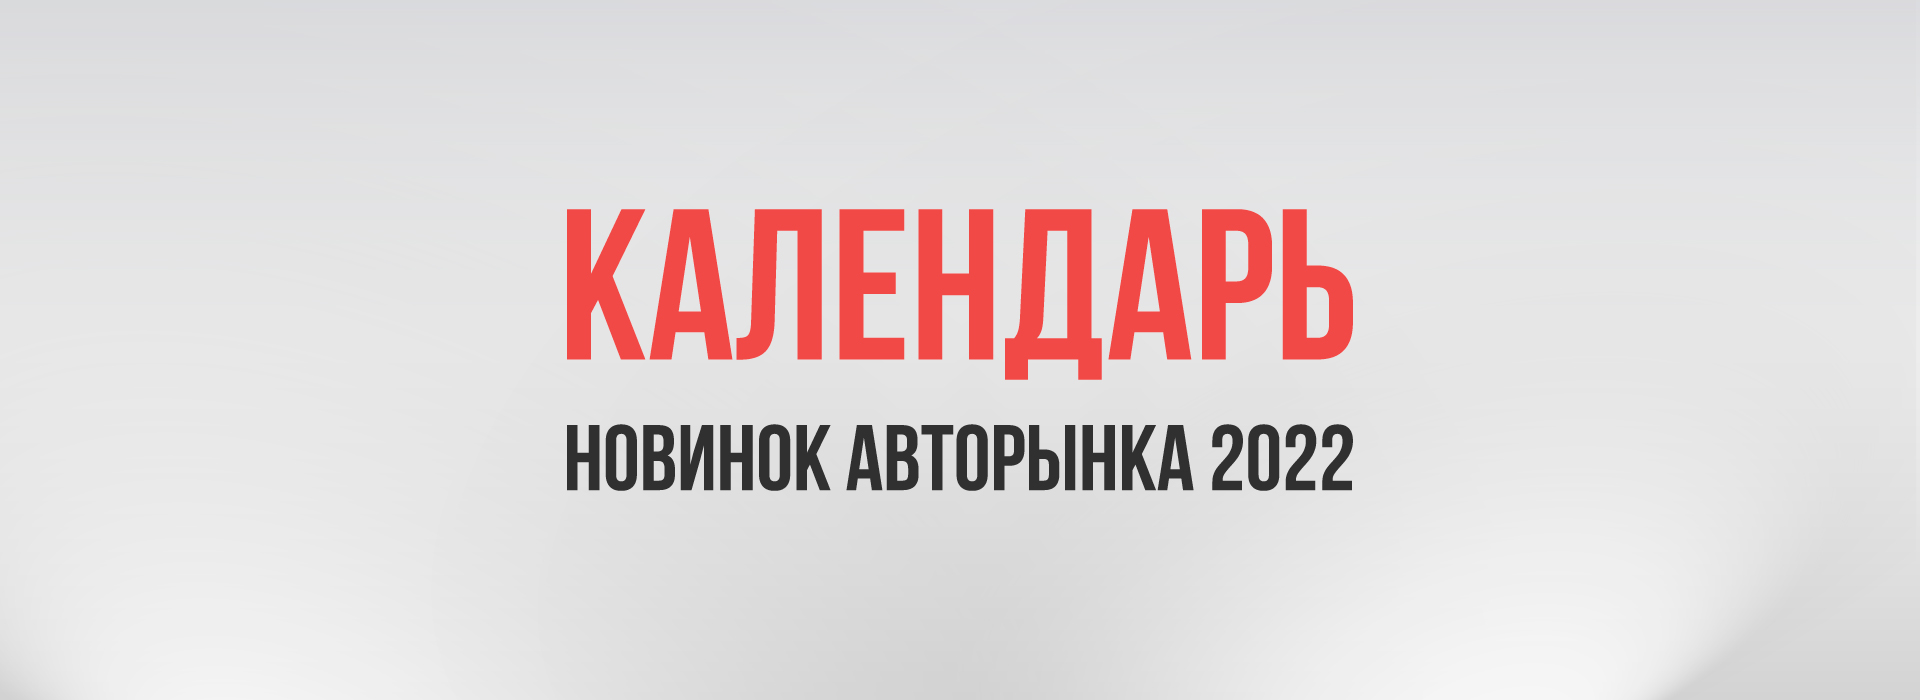 Автокалендарь новинок авторынка 2022